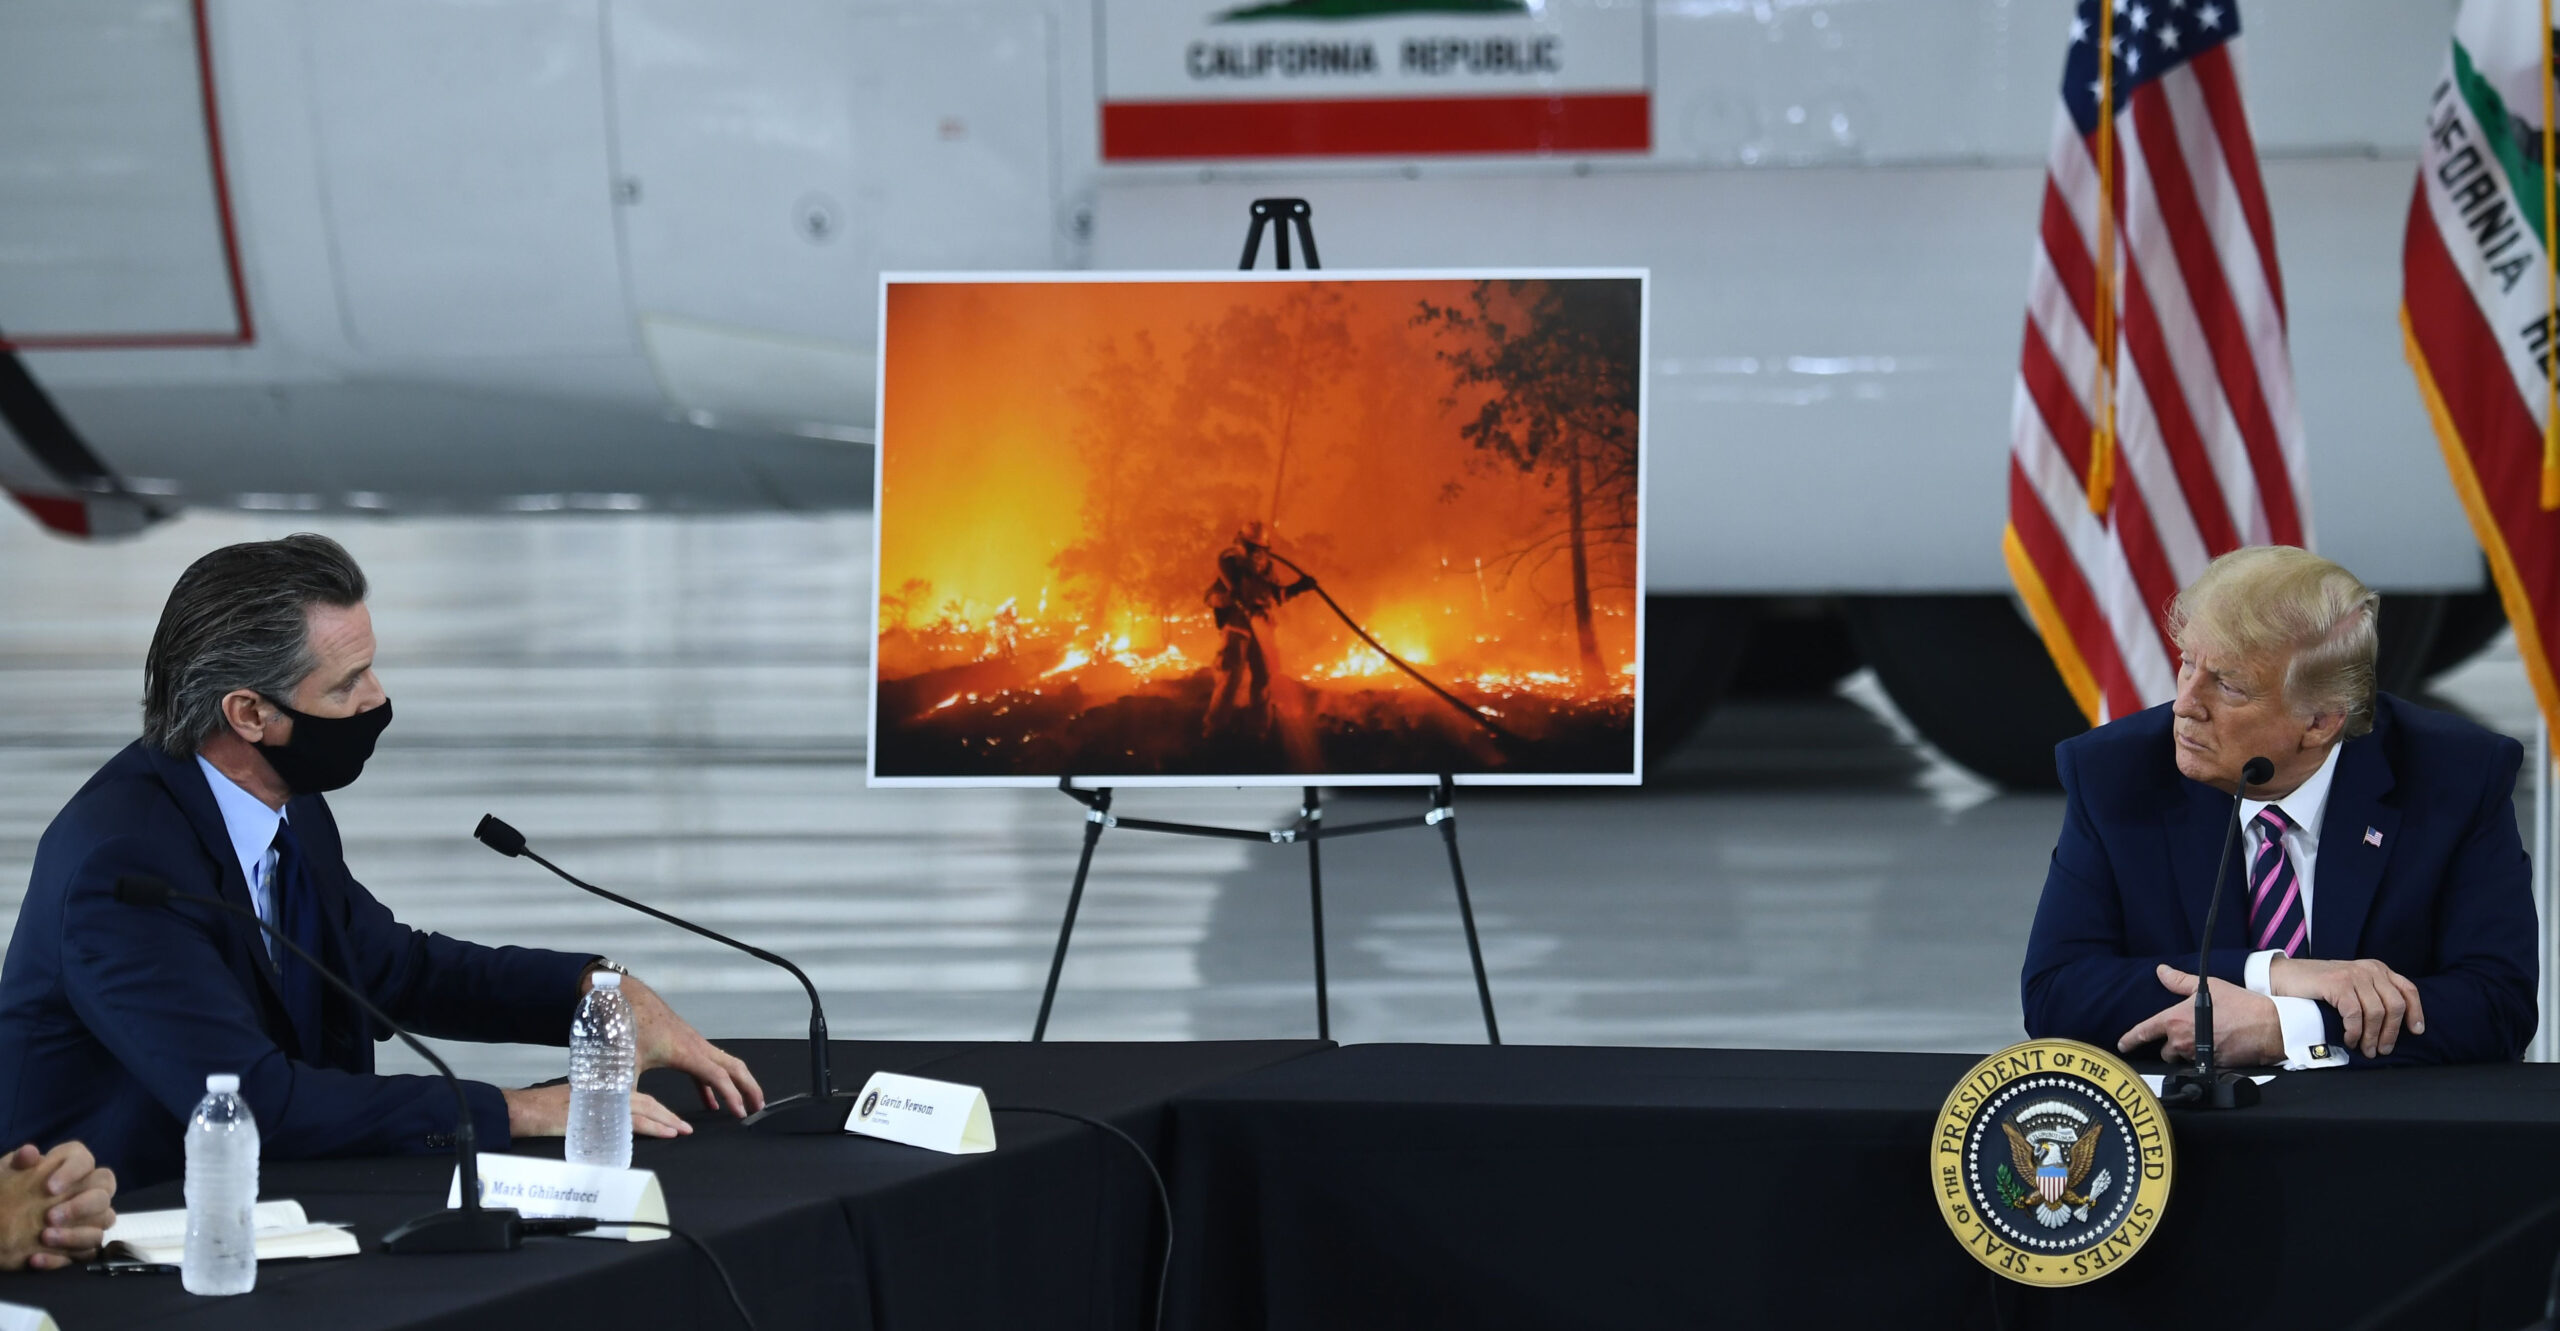 Trump, Newsom Shun Heated Partisanship in Confronting California Wildfires